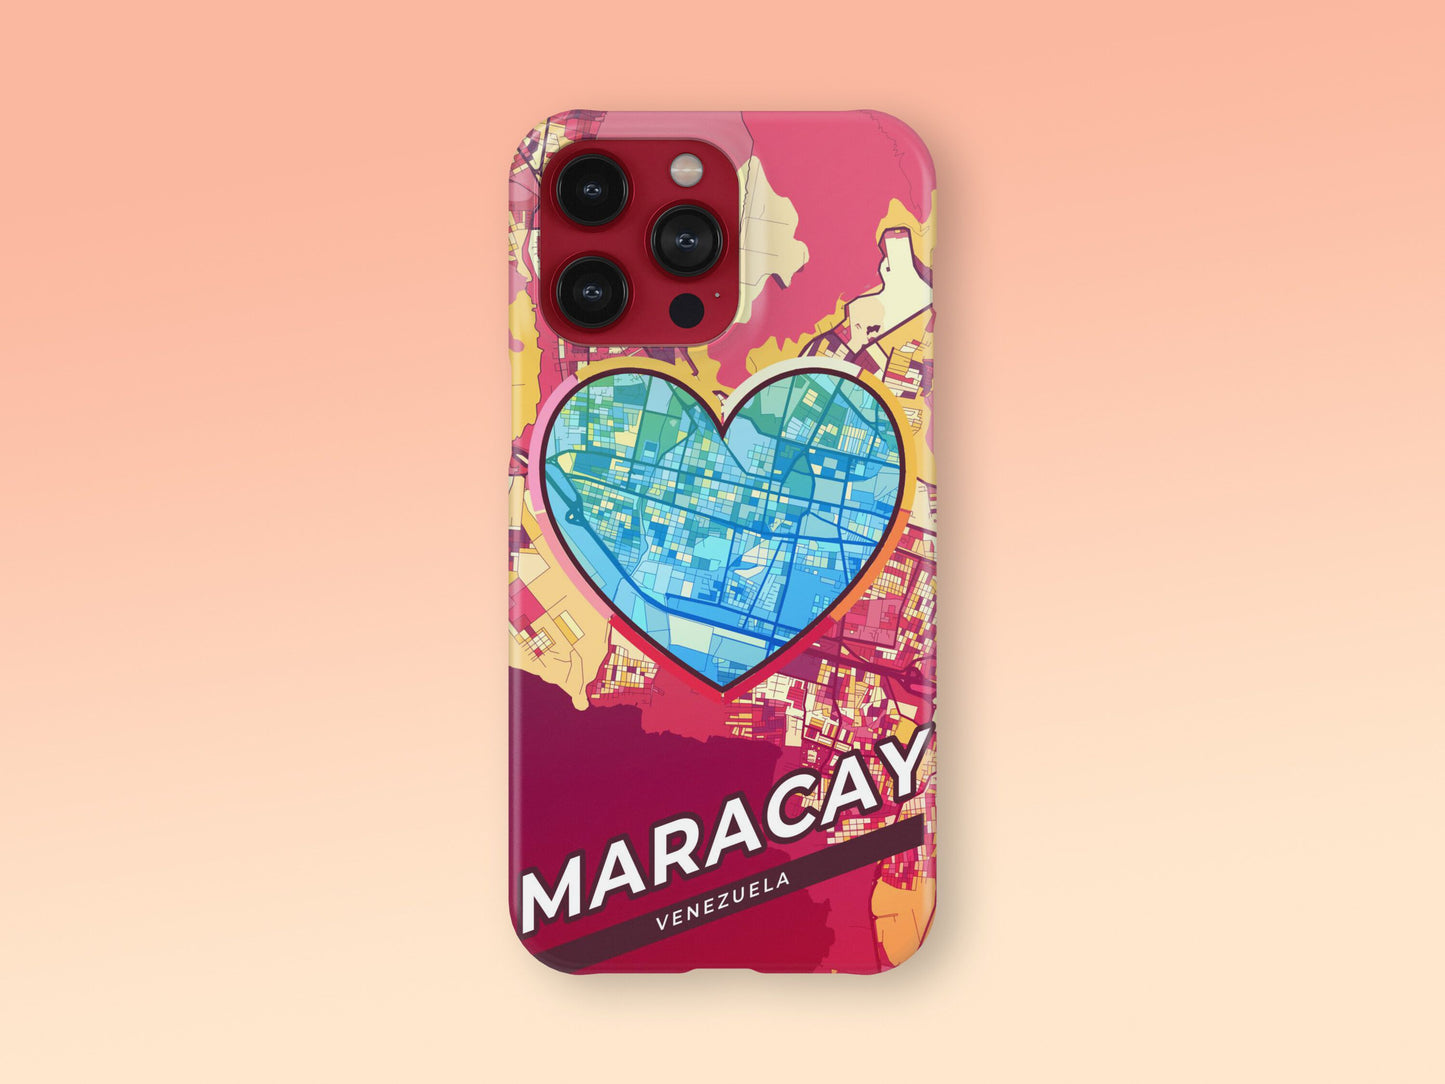 Maracay Venezuela slim phone case with colorful icon. Birthday, wedding or housewarming gift. Couple match cases. 2